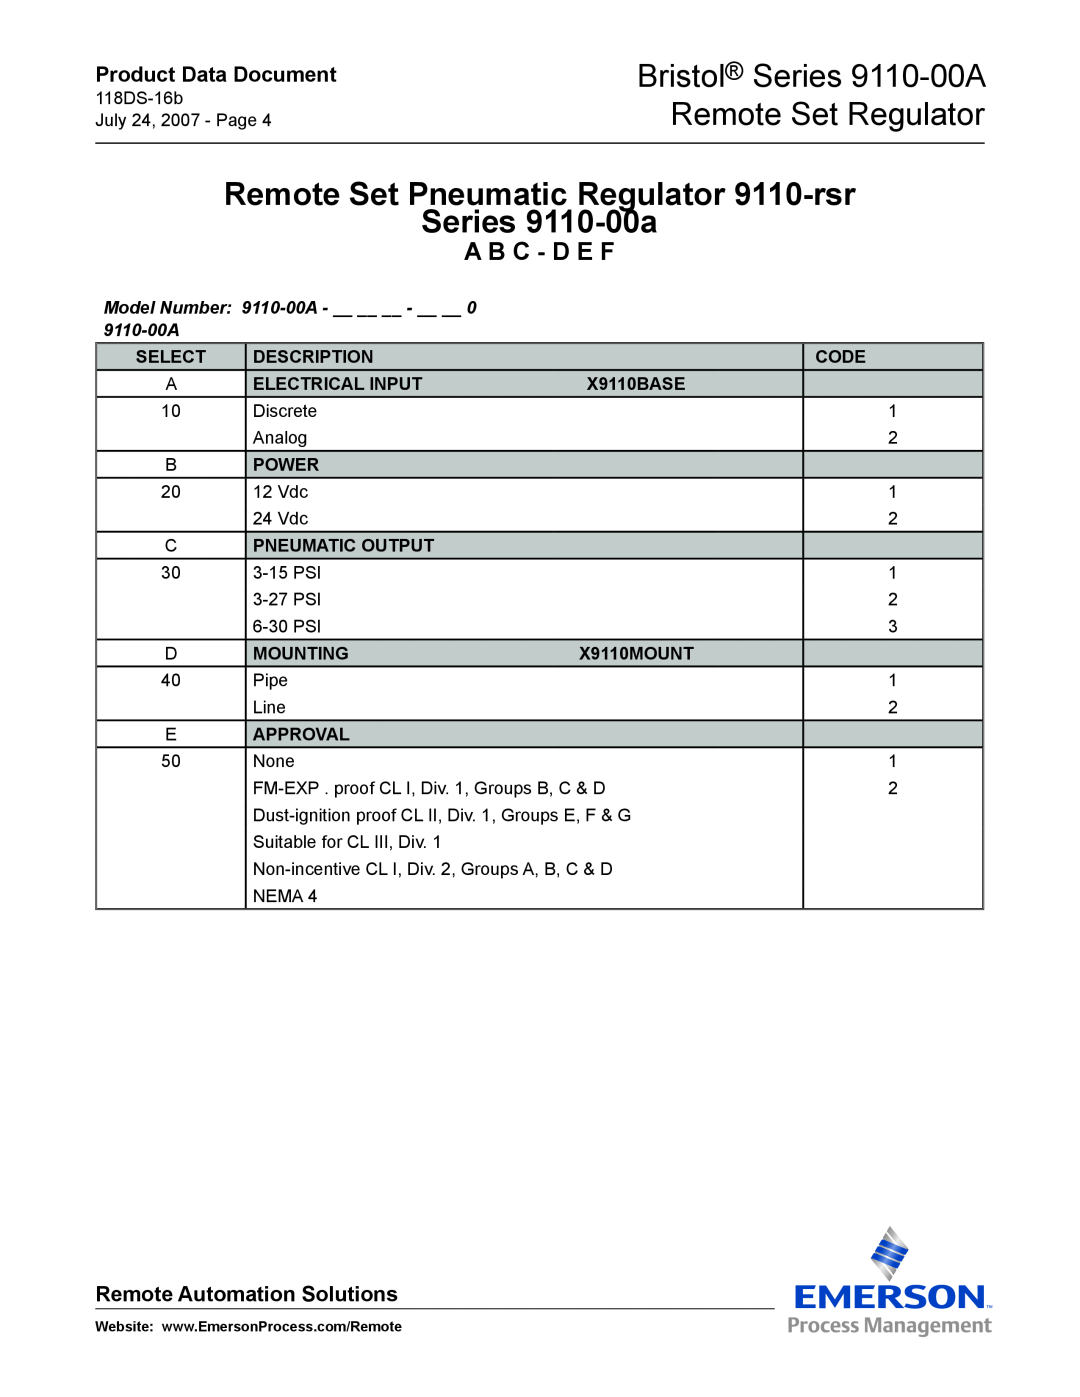 Emerson Process Management Bristol Series 9110-00A Remote Set Regulator, A B C - D E F, Product Data Document, Select 